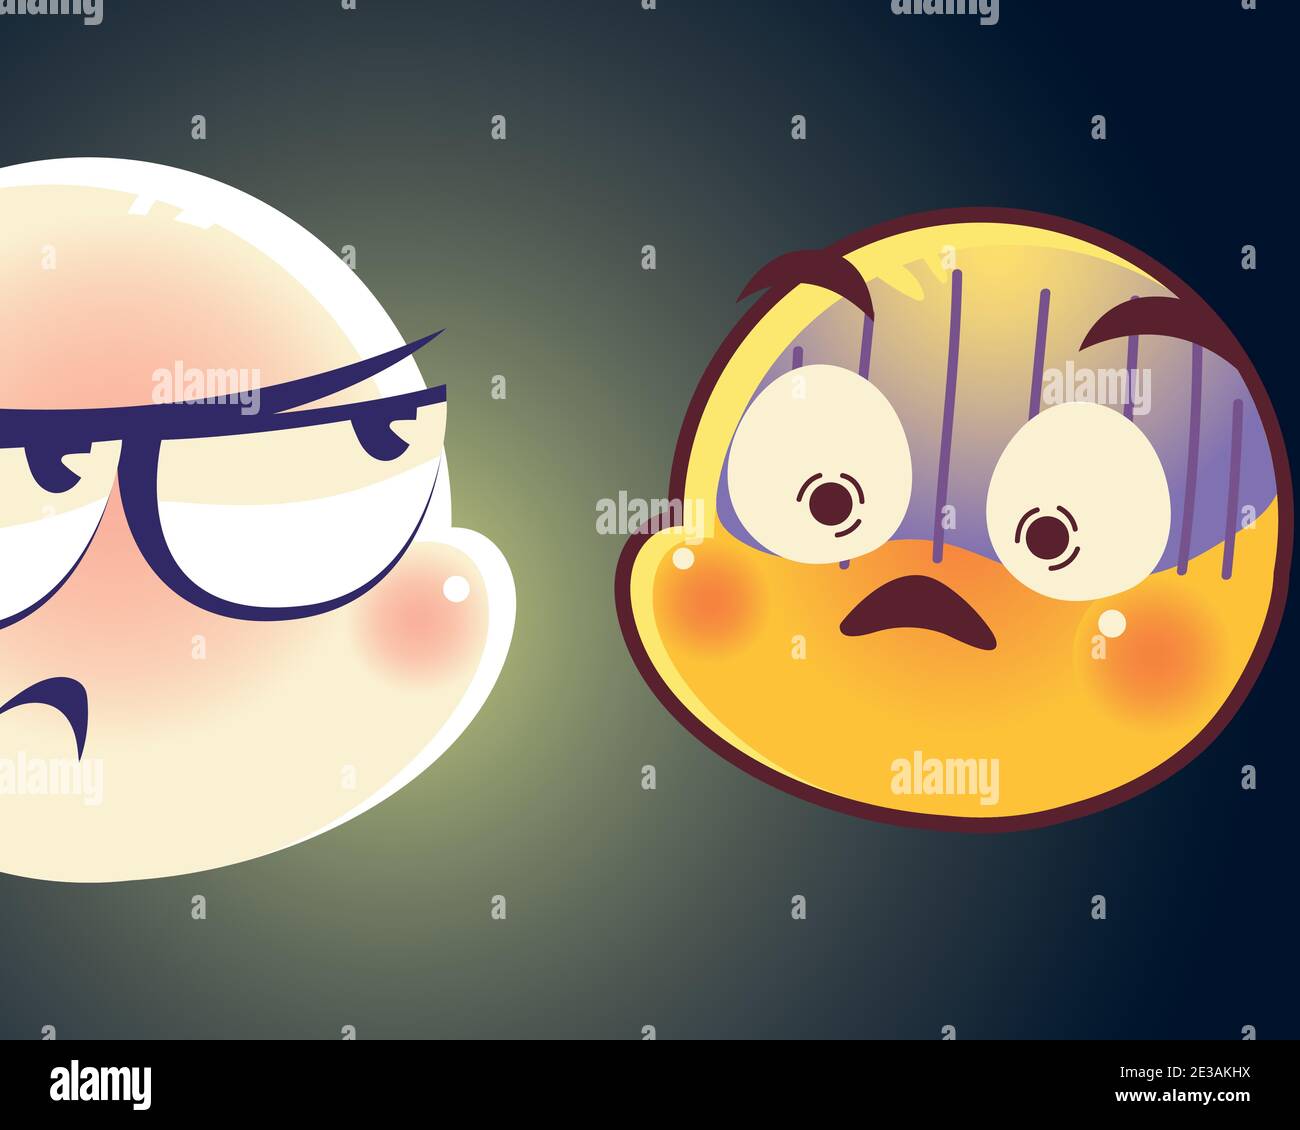 emoji faces expression sad mood surprise scared cartoon vector illustration  Stock Vector Image & Art - Alamy